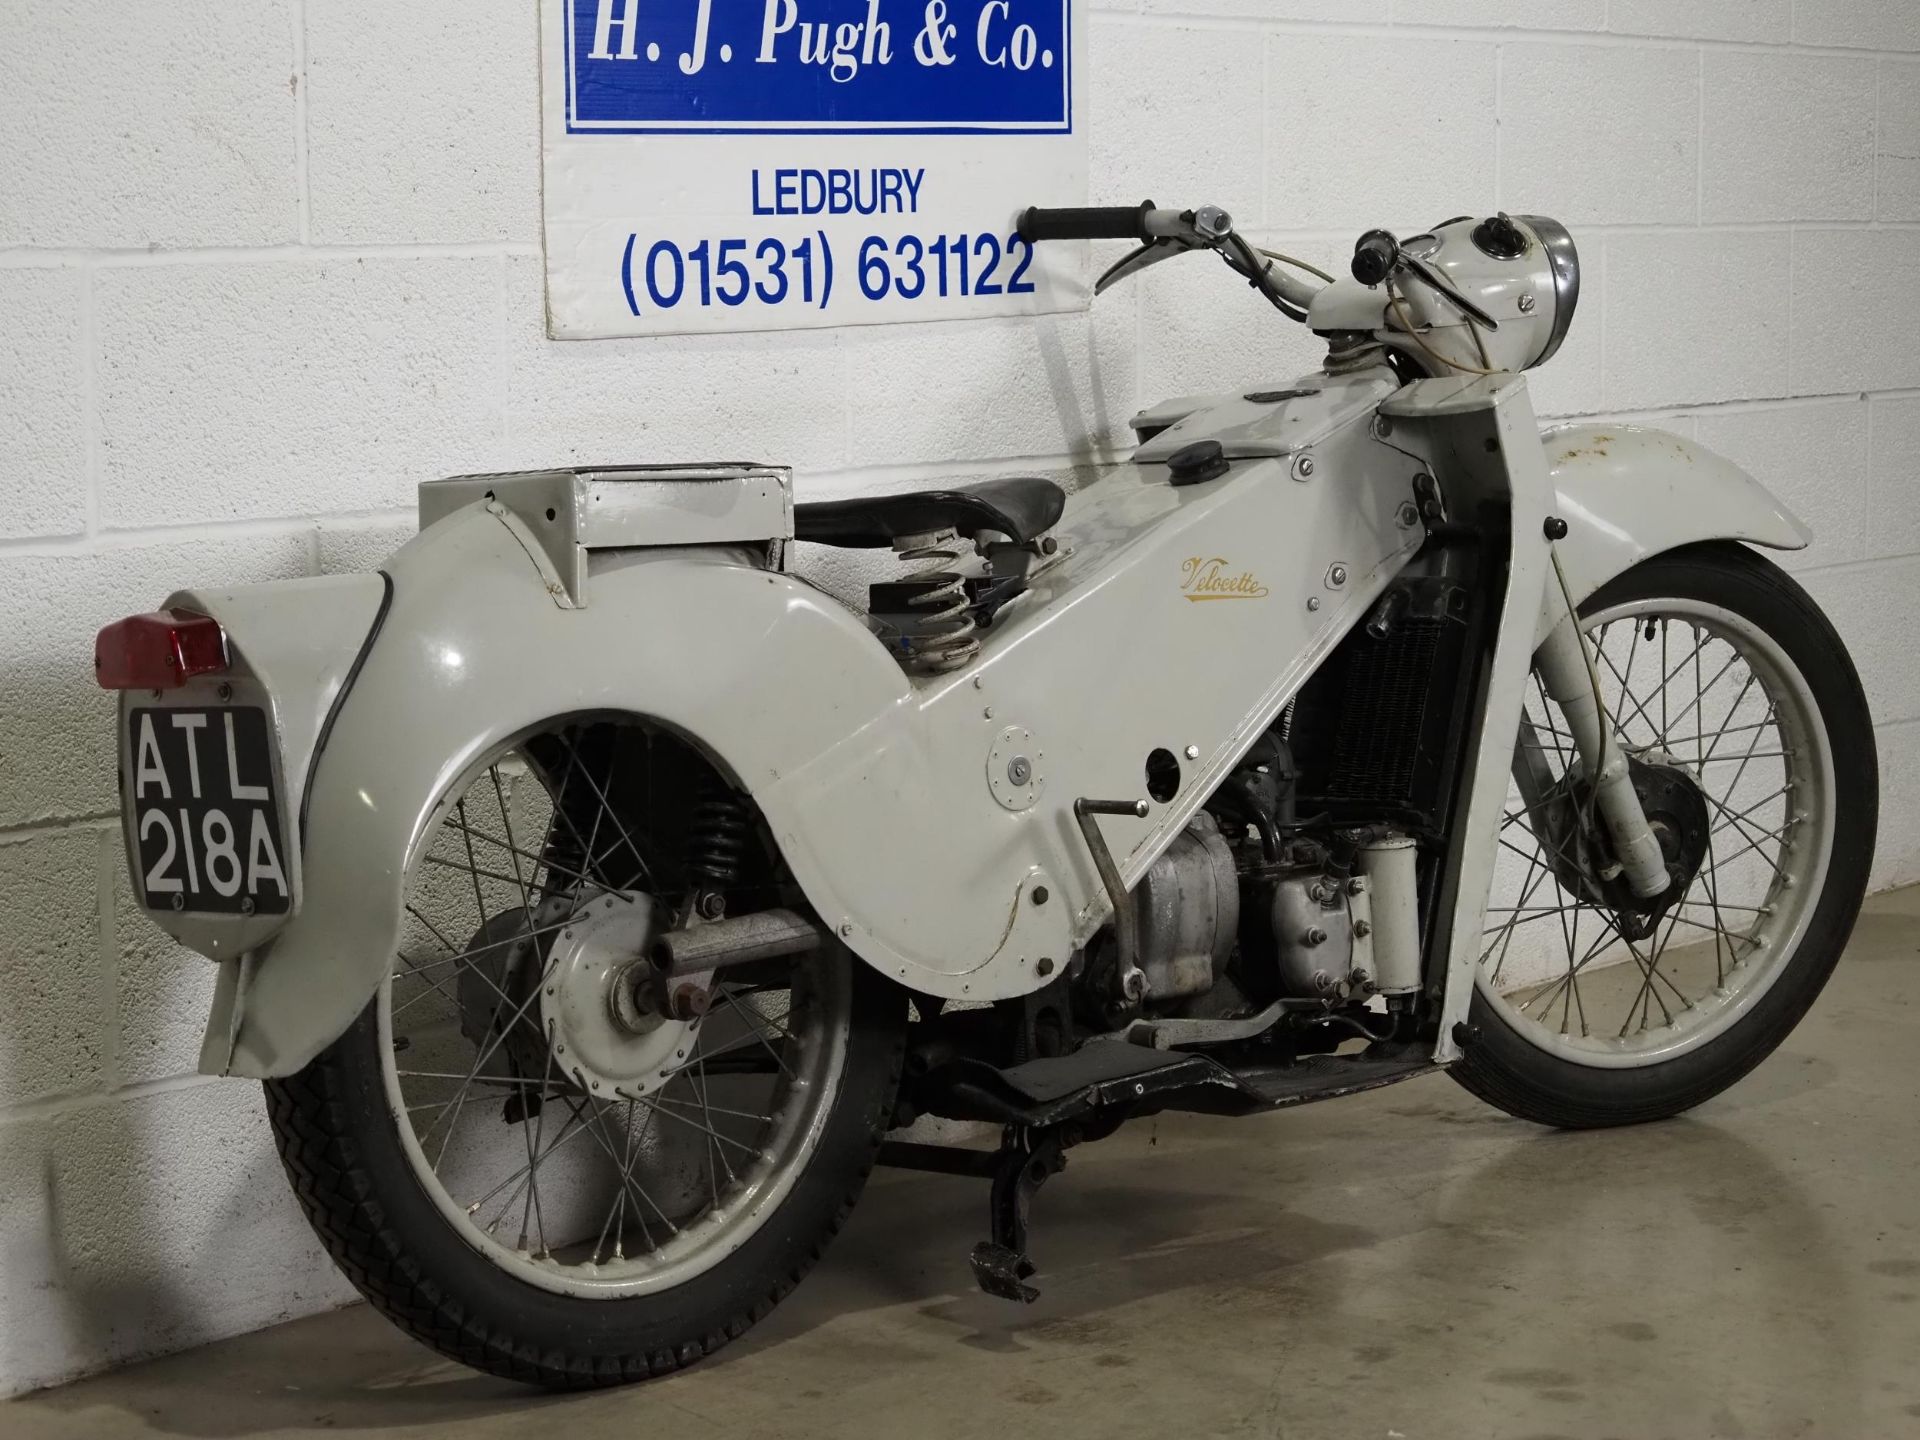 Velocette LE Mk3 motorcycle. 1963. 200cc Engine turns over. Reg. ATL 218A. V5. - Image 3 of 6